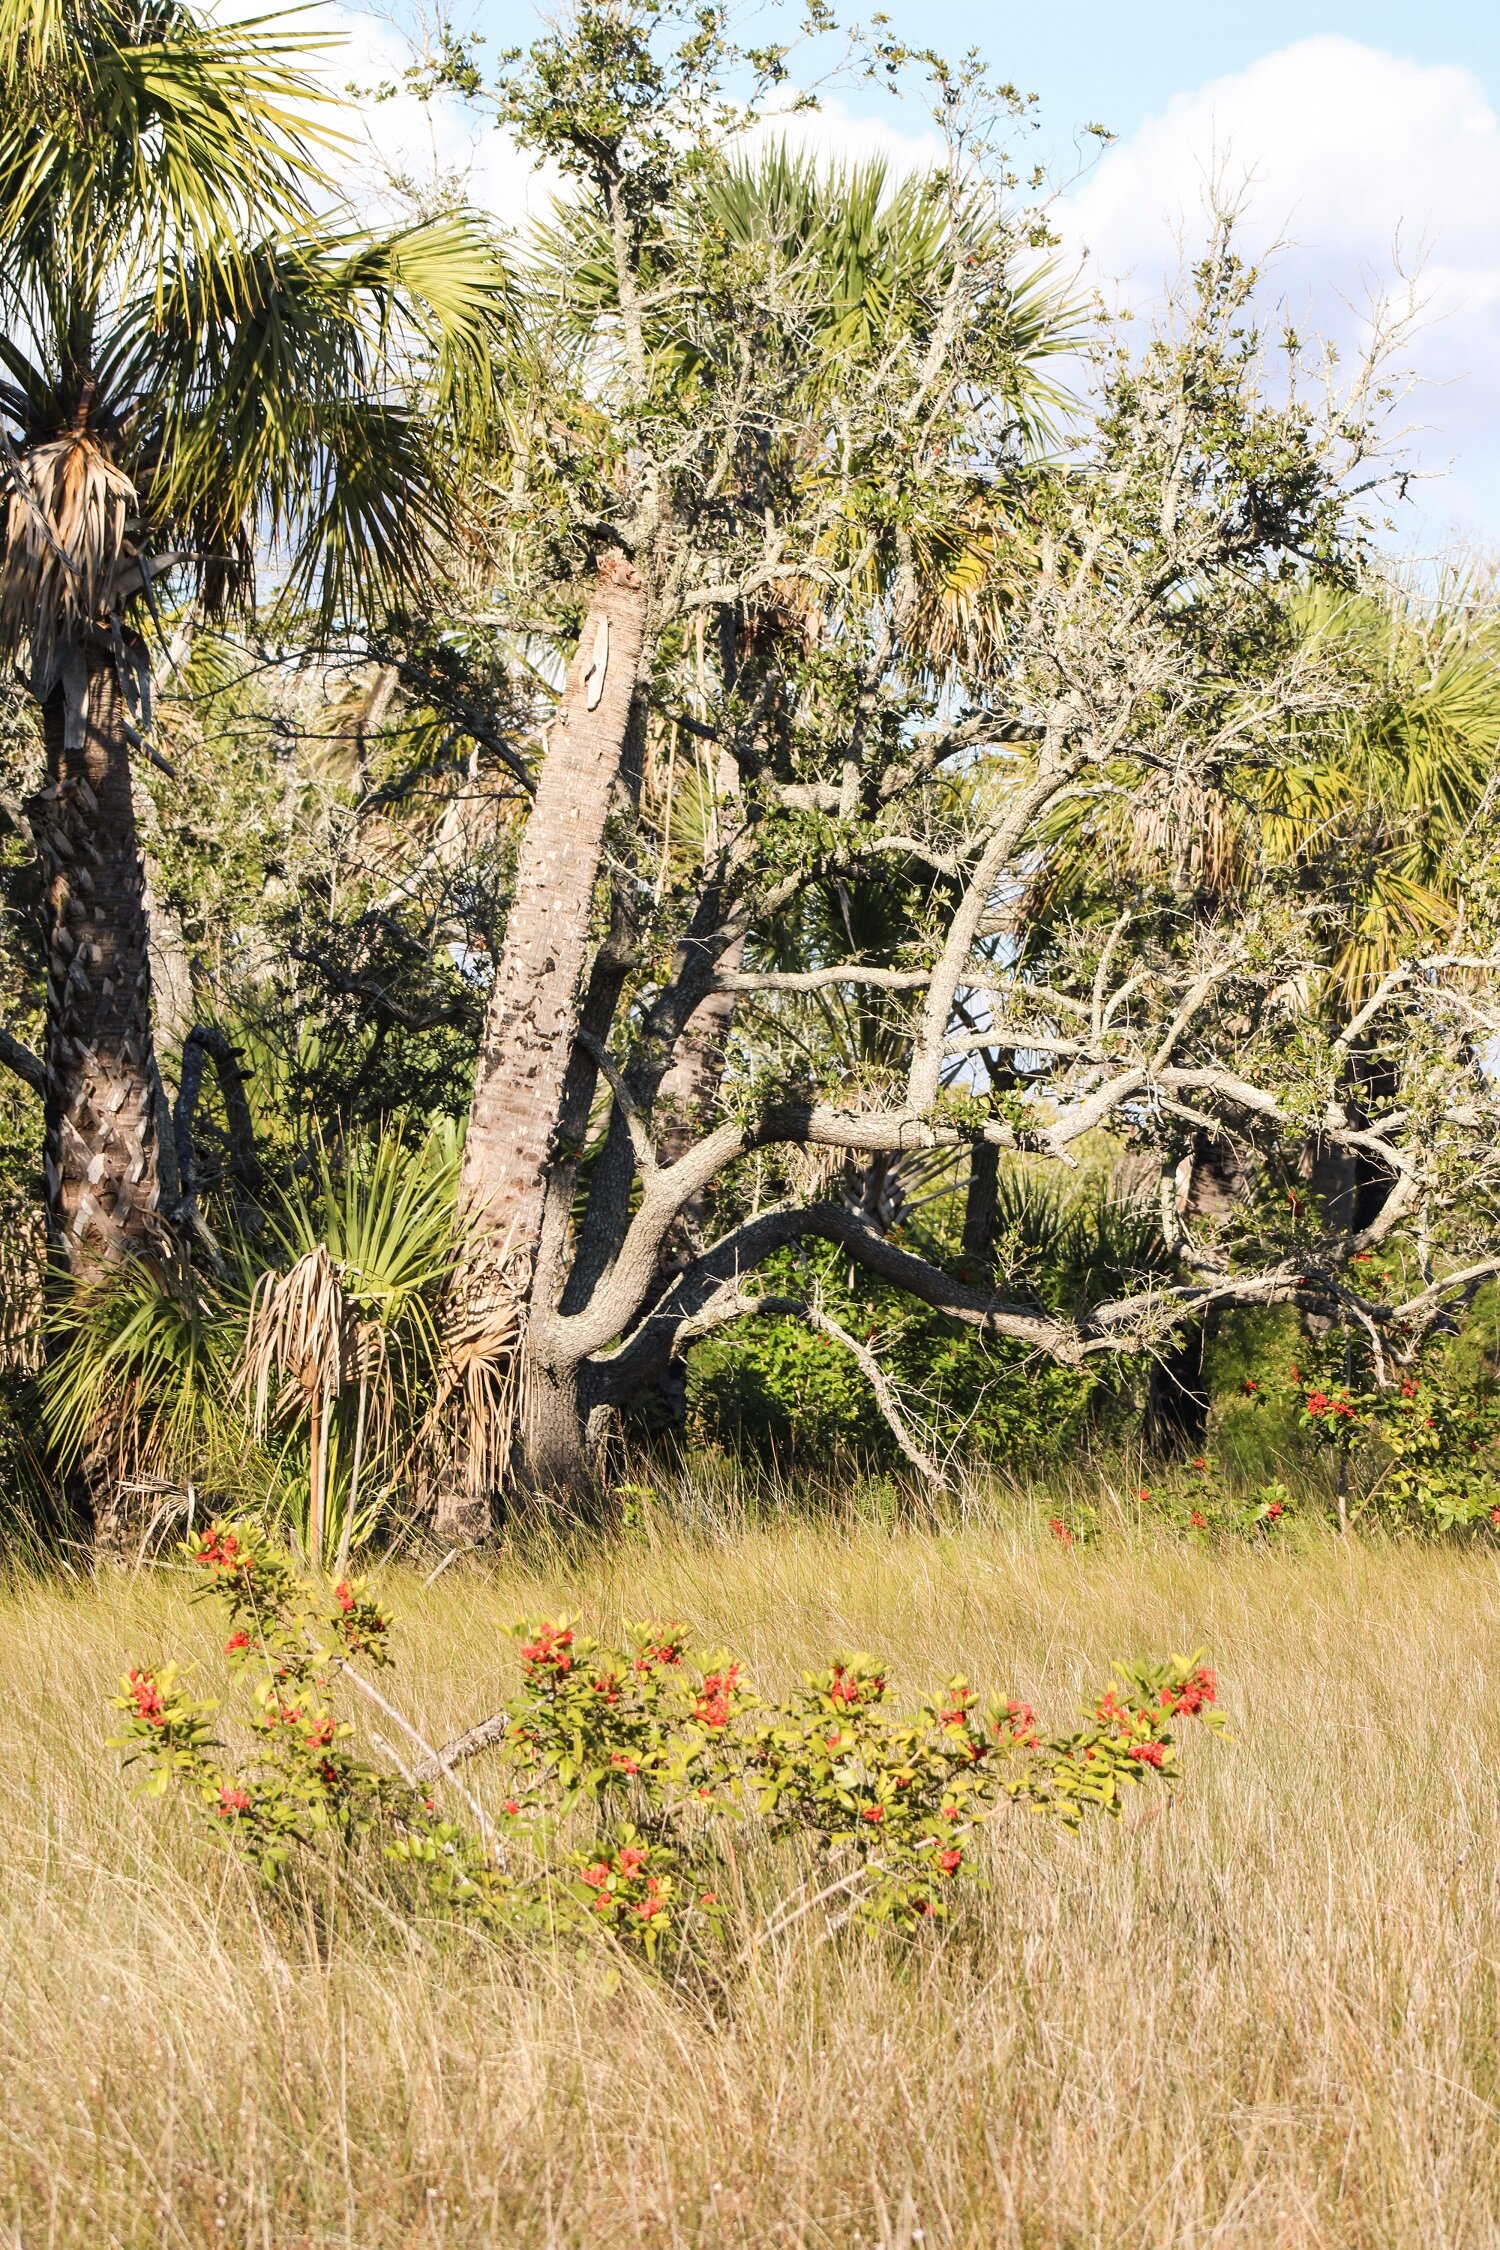 Our favorite Tampa Bay parks to visit | Blooming Magnolias Blog | Travel, Florida travel